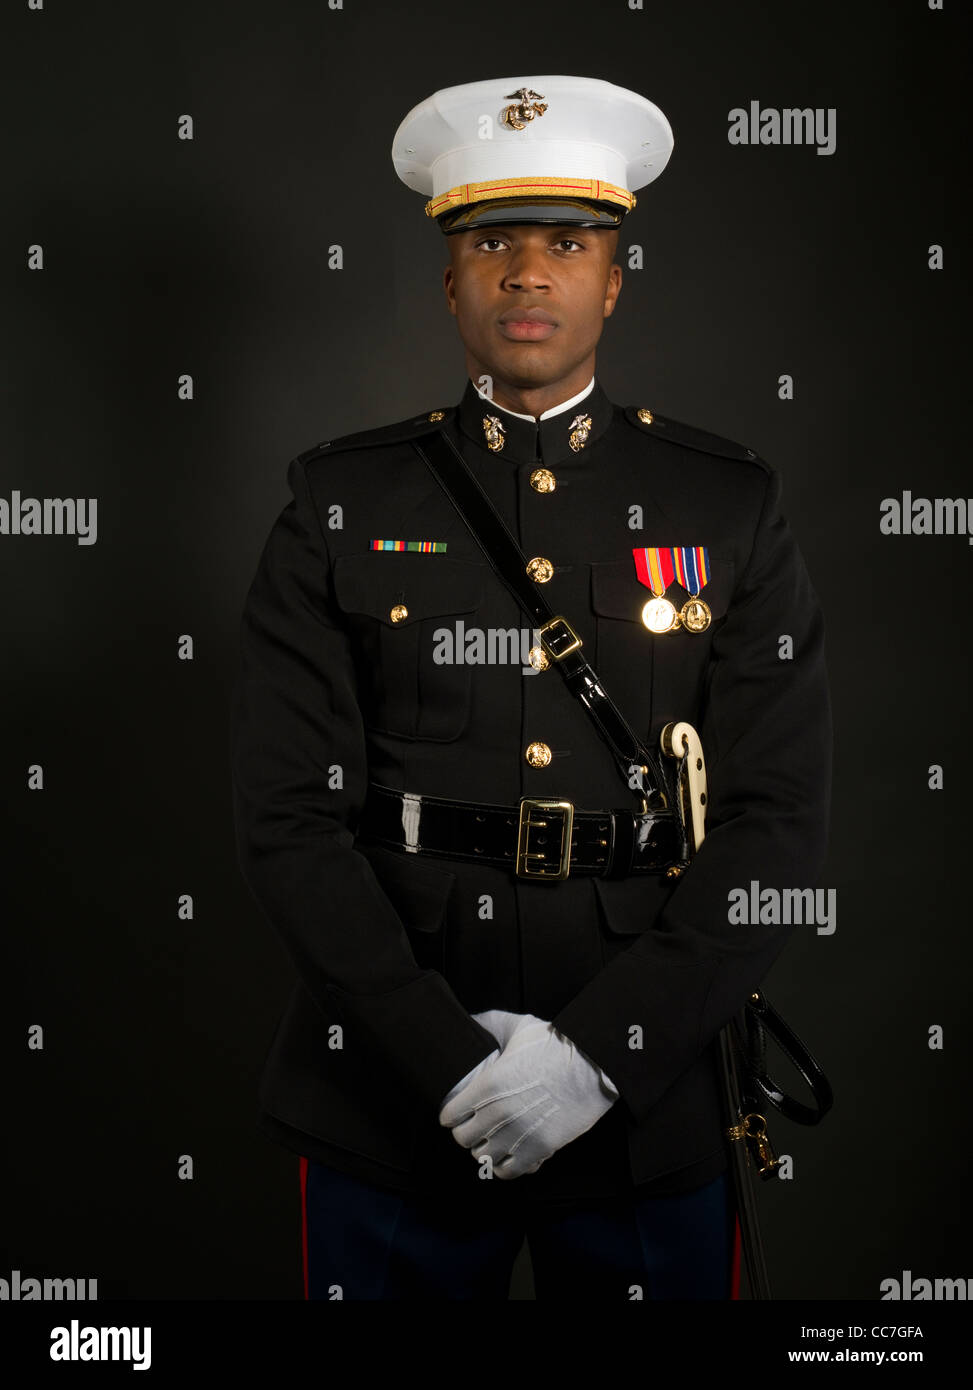 Marine Uniform Images 120